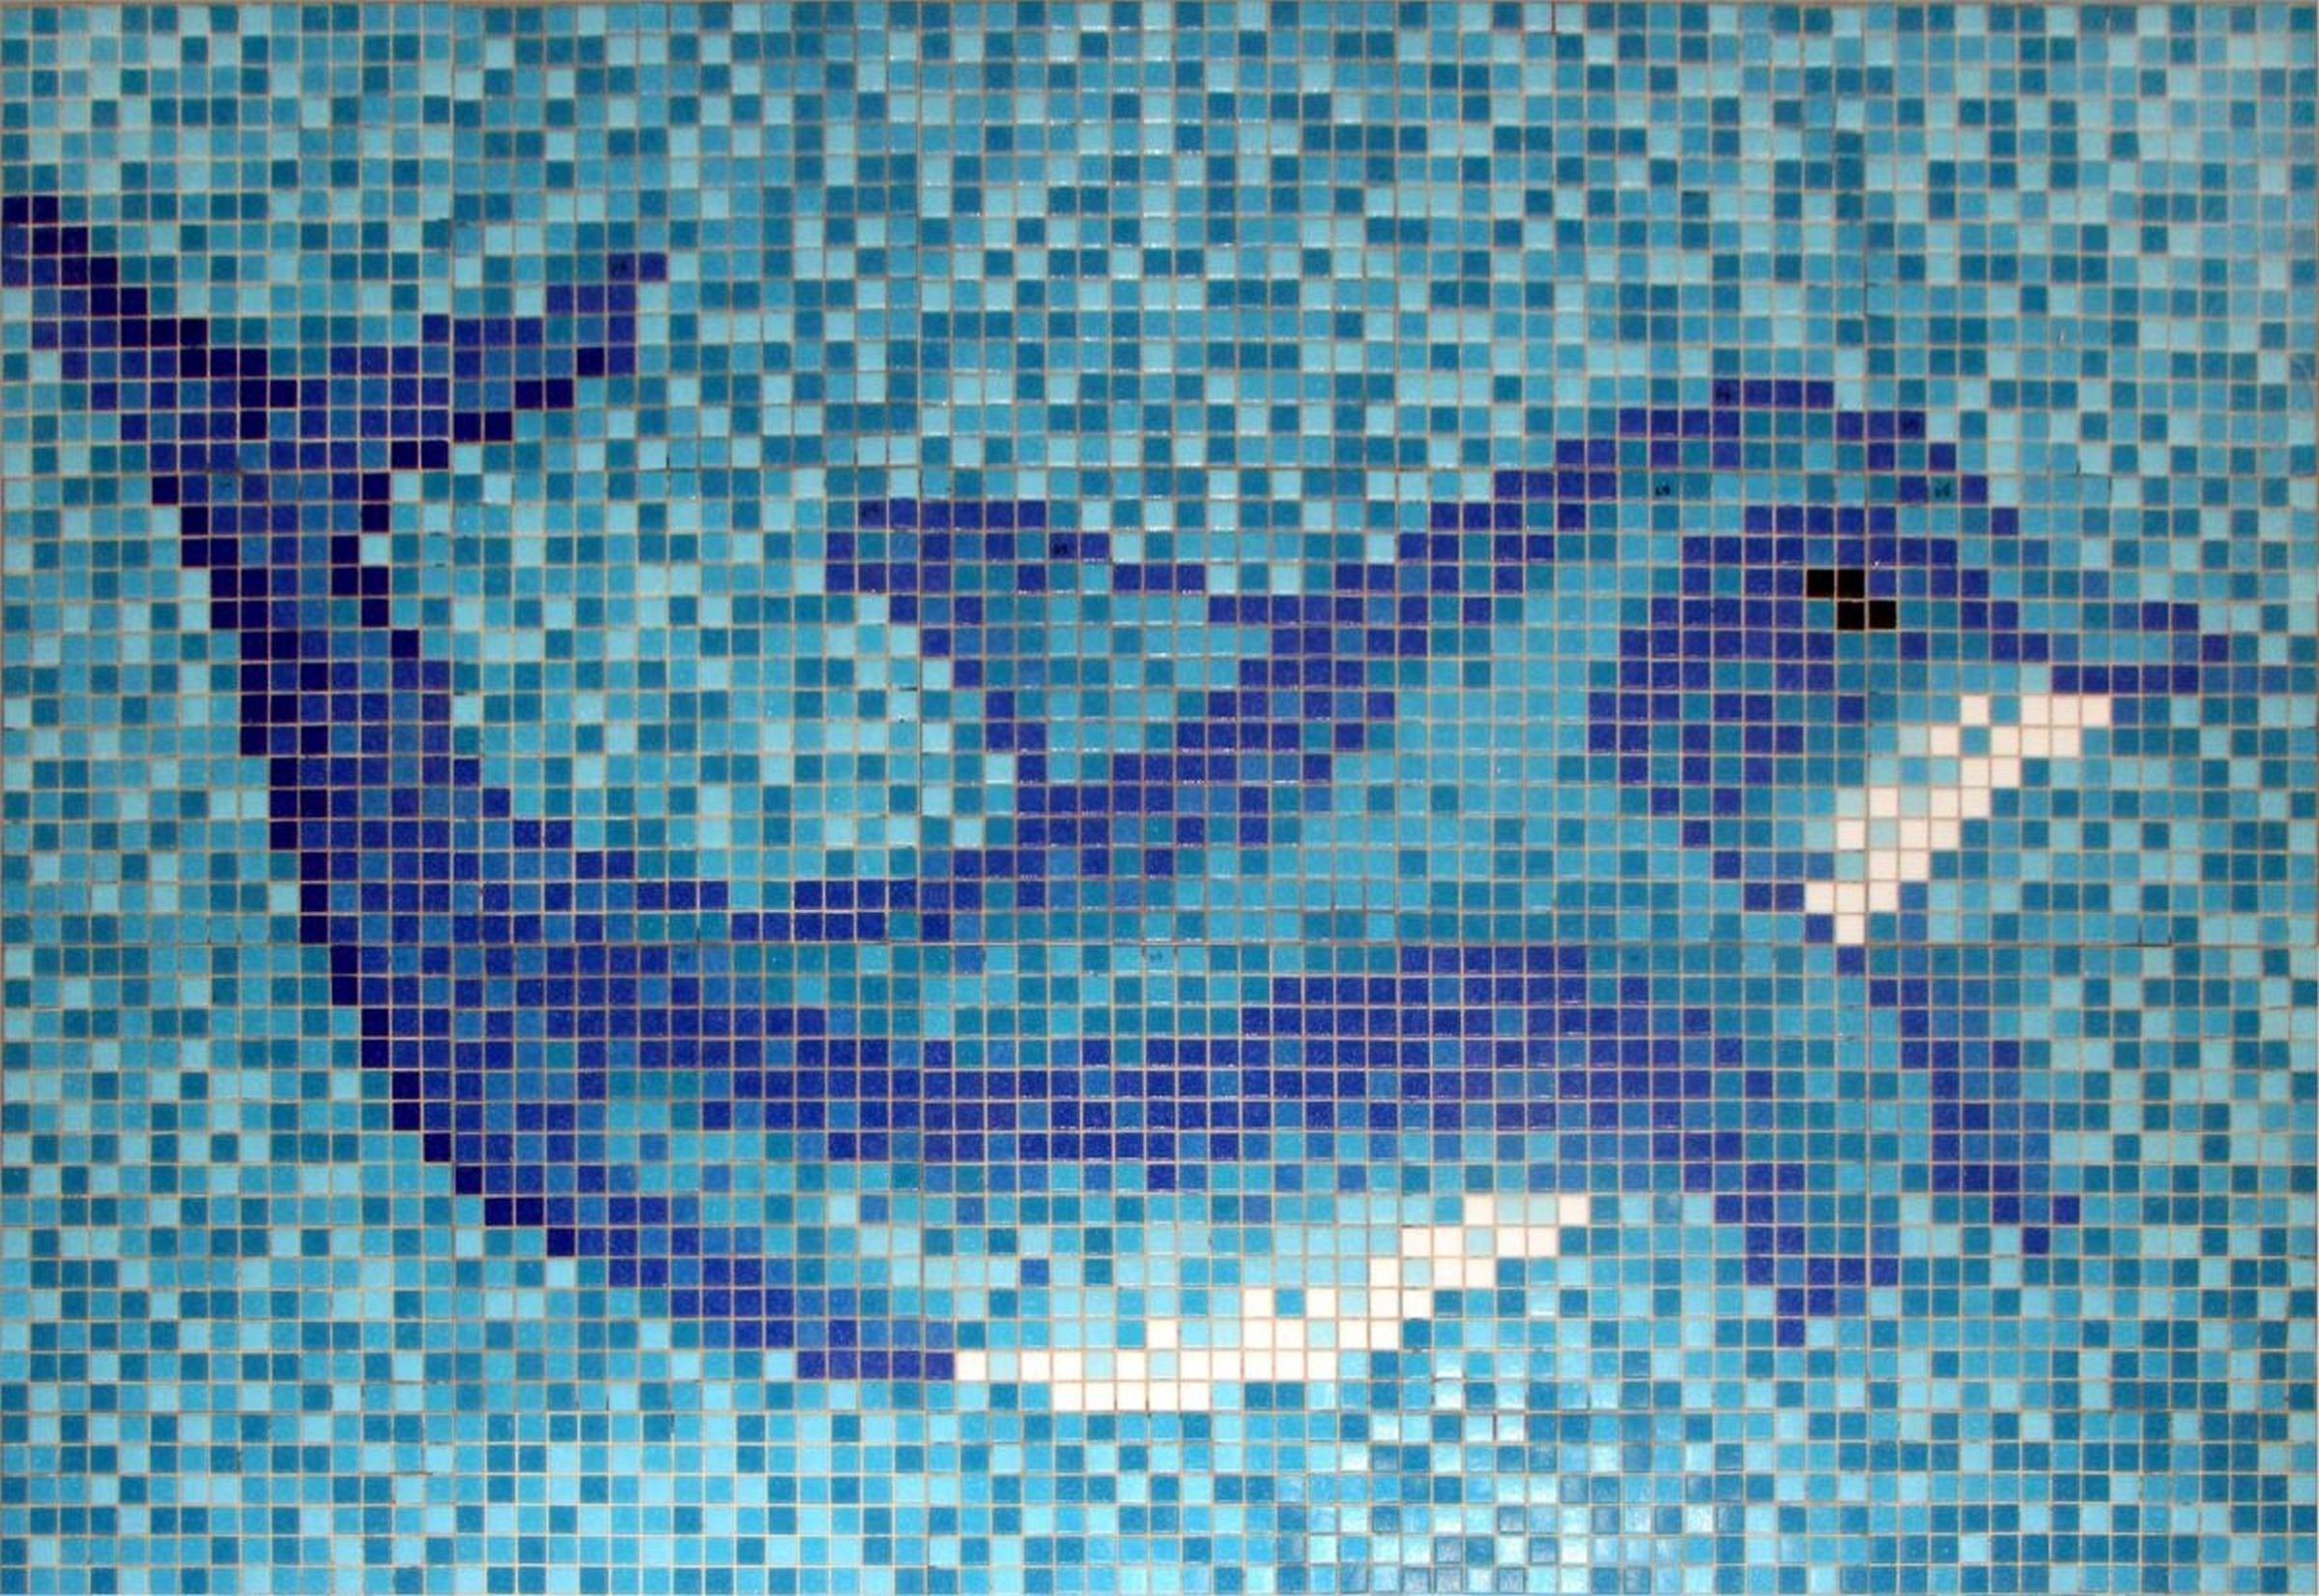 Poolboden Papierverklebt blau, Mosani hellblau Delphin Mosaikfliesen Bild Glasmosaik